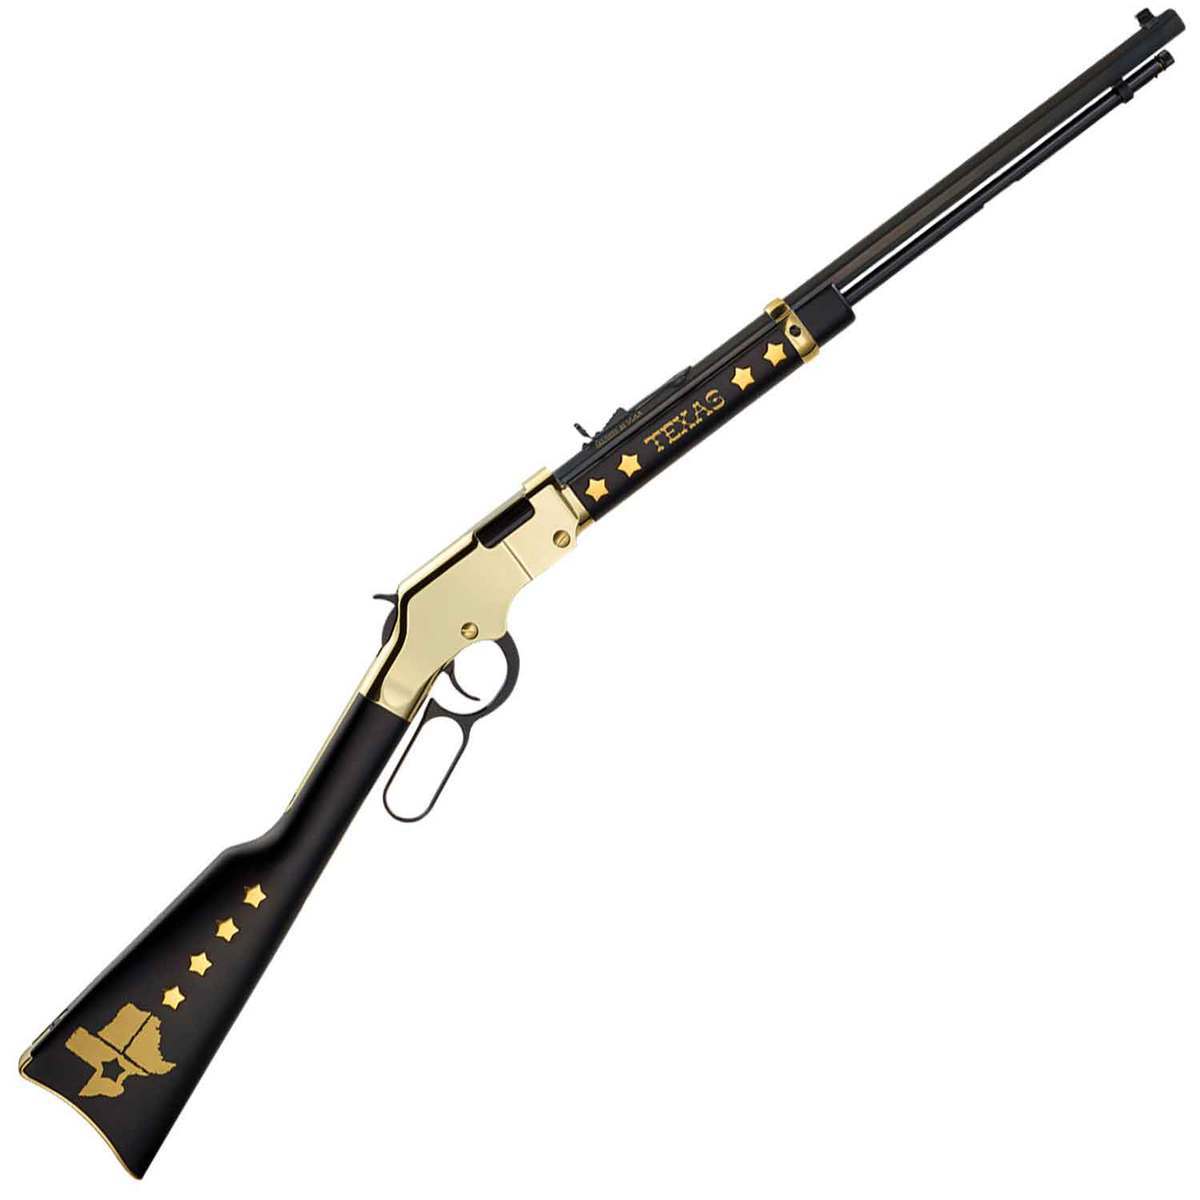 22 Long Rifle - The Brass King